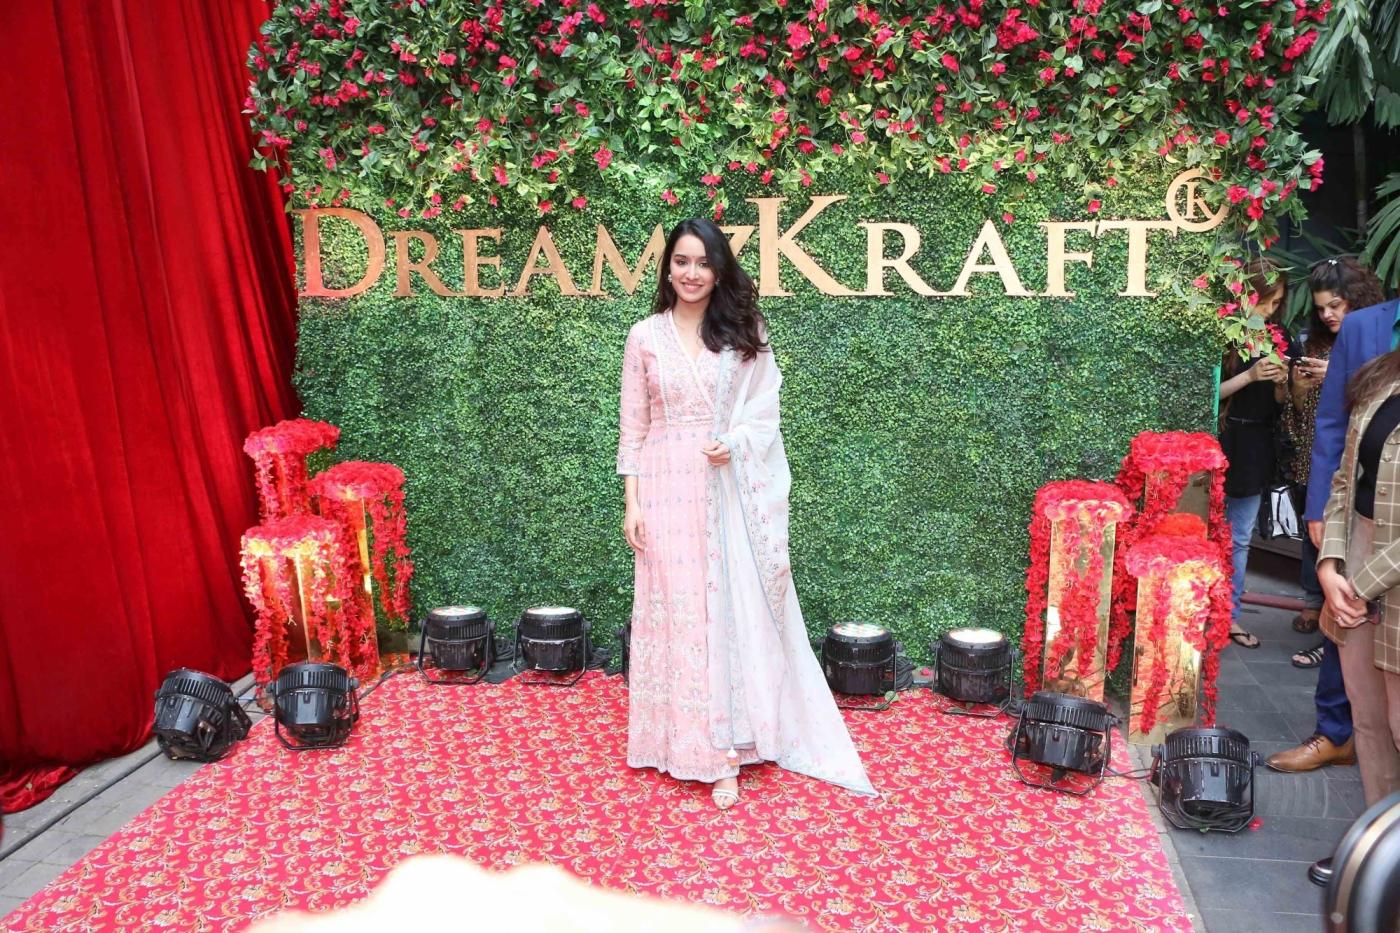 Mumbai: Actress Shraddha Kapoor during the inauguration of 'Wedding Junction show' - a Wedding Expo in Mumbai on Jan 20, 2018. (Photo: IANS) by .